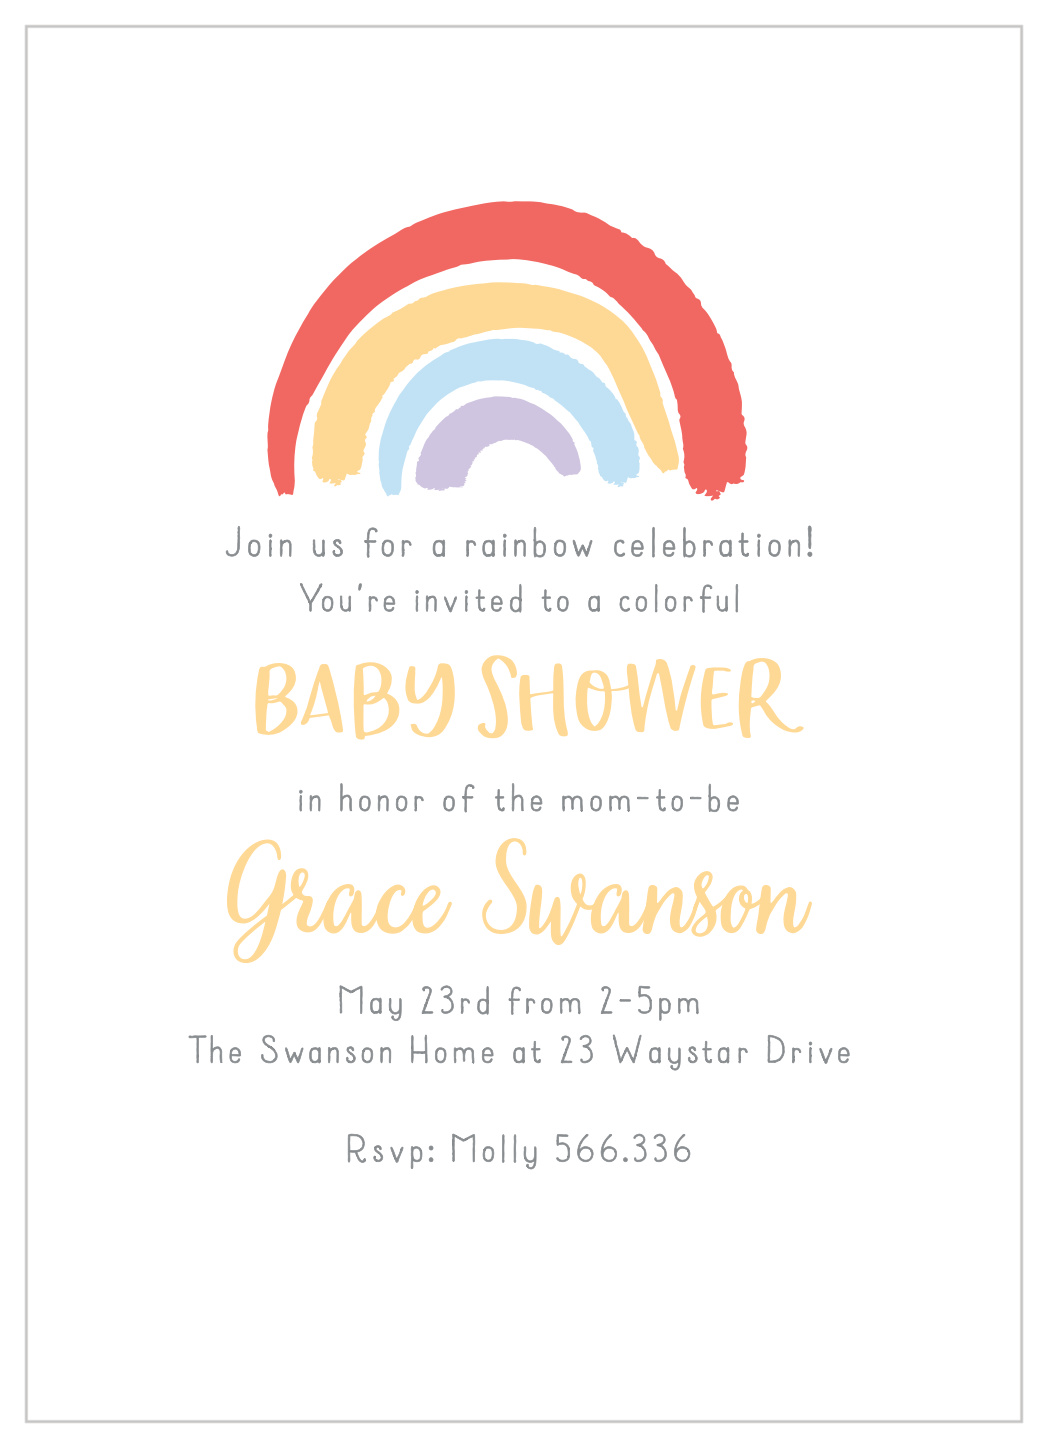 Custom Printed 5x7 Rainbow Baby Shower Invitation Miracle Baby Invitation Rainbow Invite with envelopes Rainbow Baby Baby Shower Invite